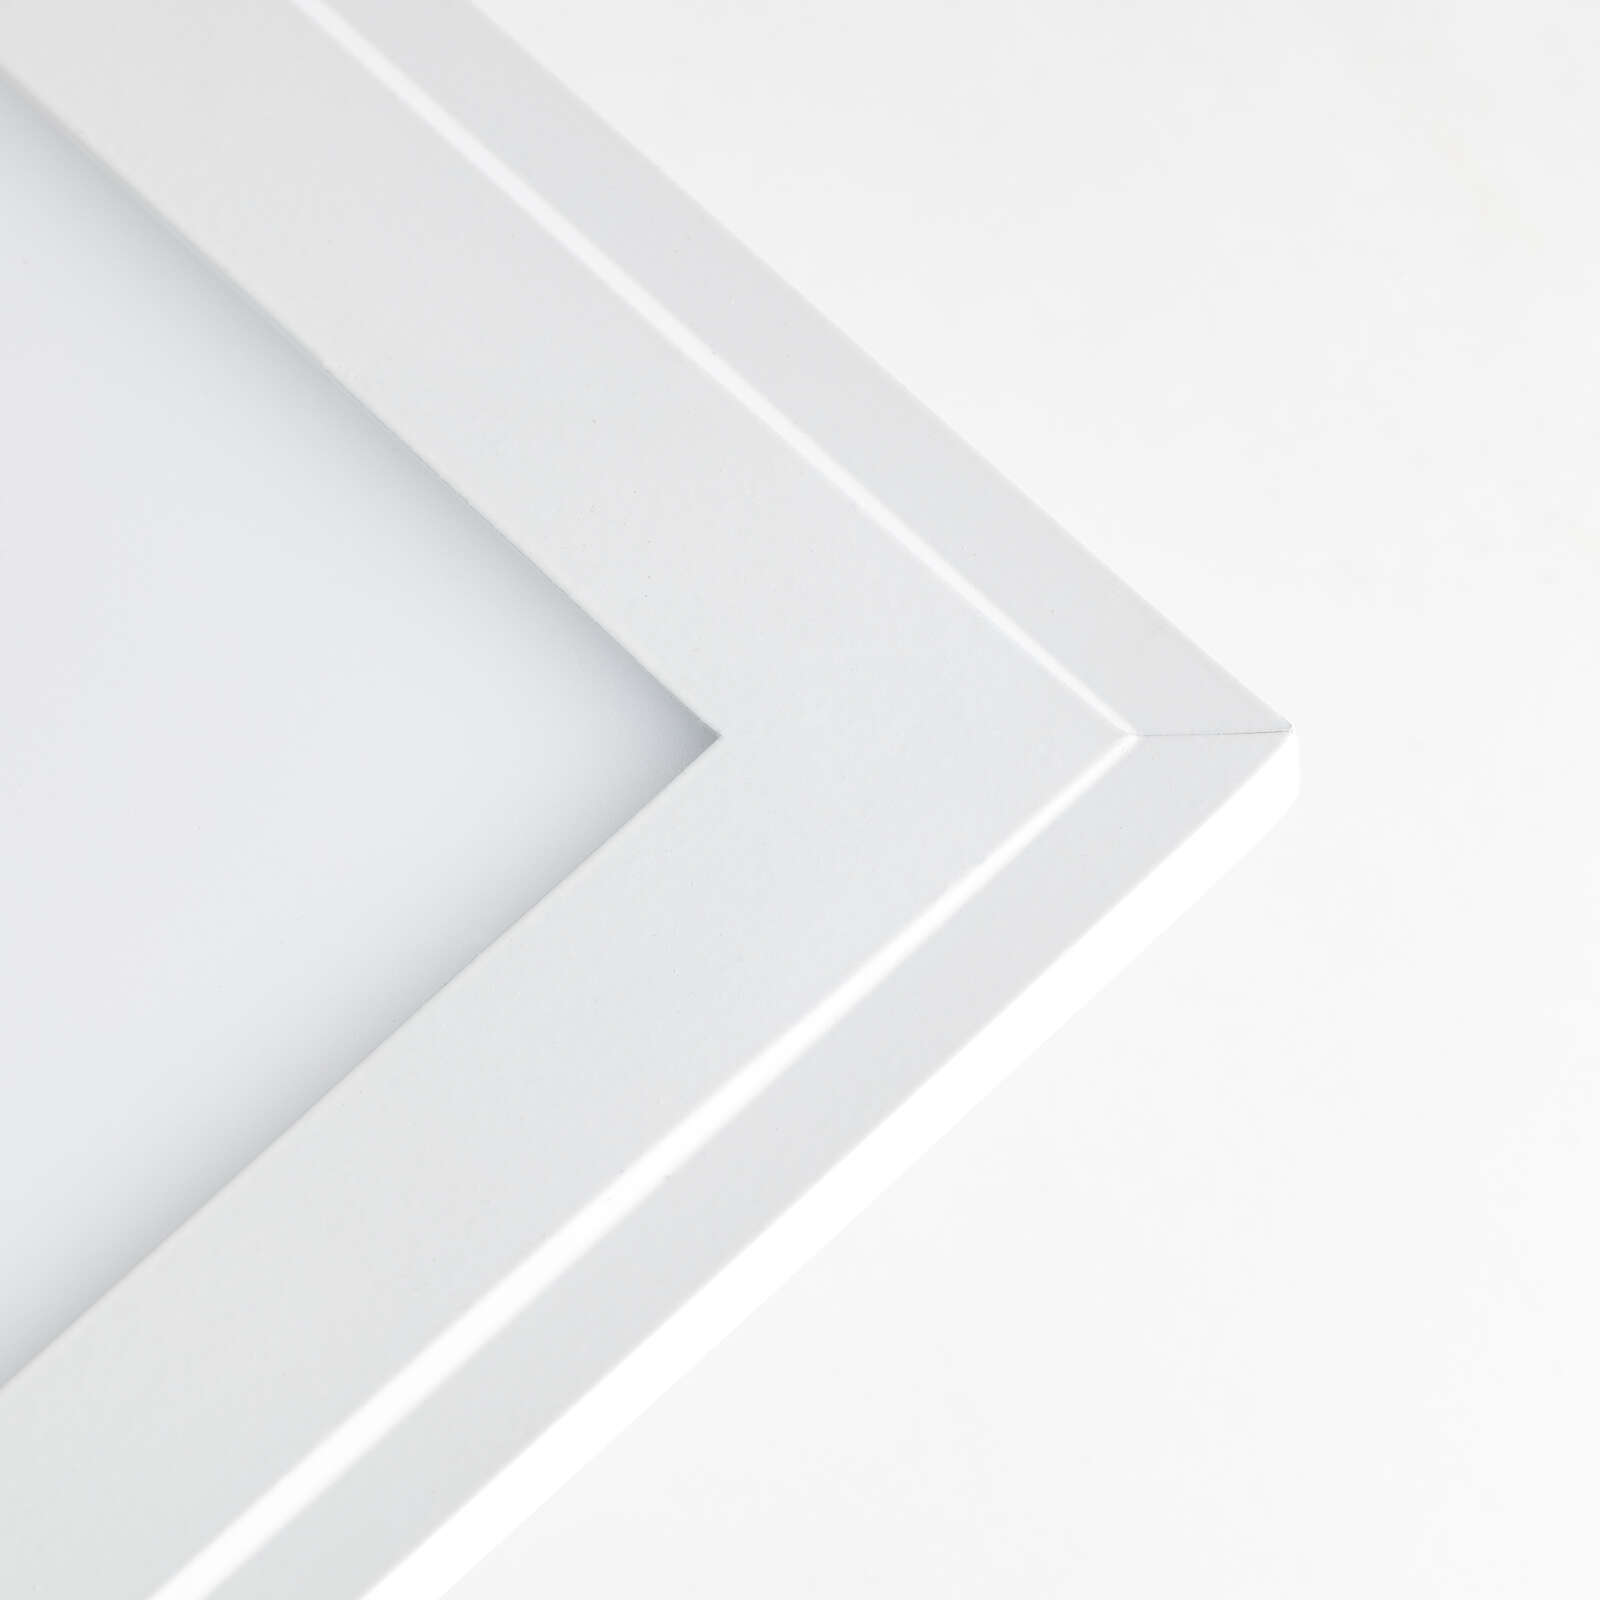             Plastic ceiling light - Aaron 6 - White
        